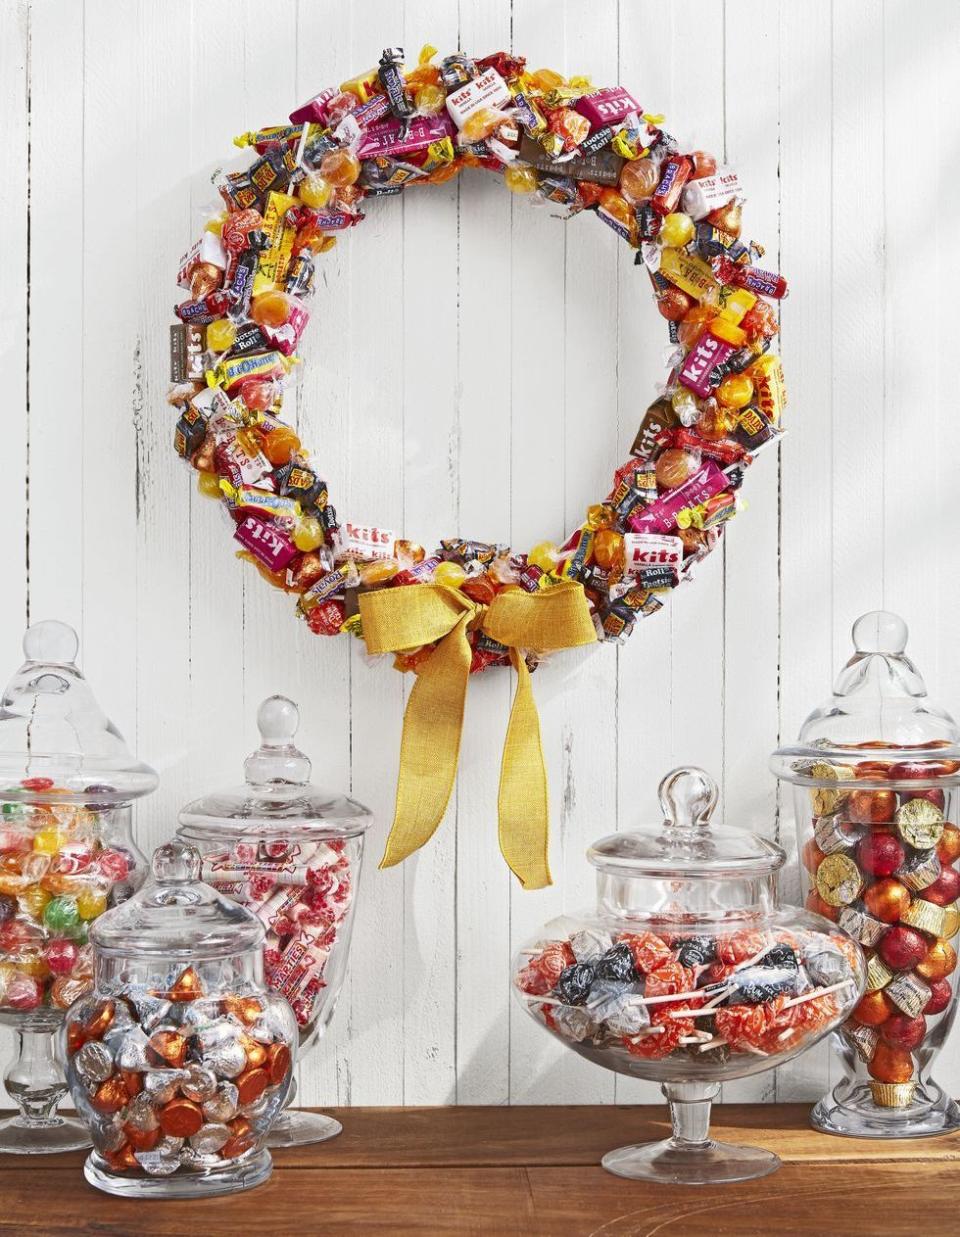 Create a Candy Wreath